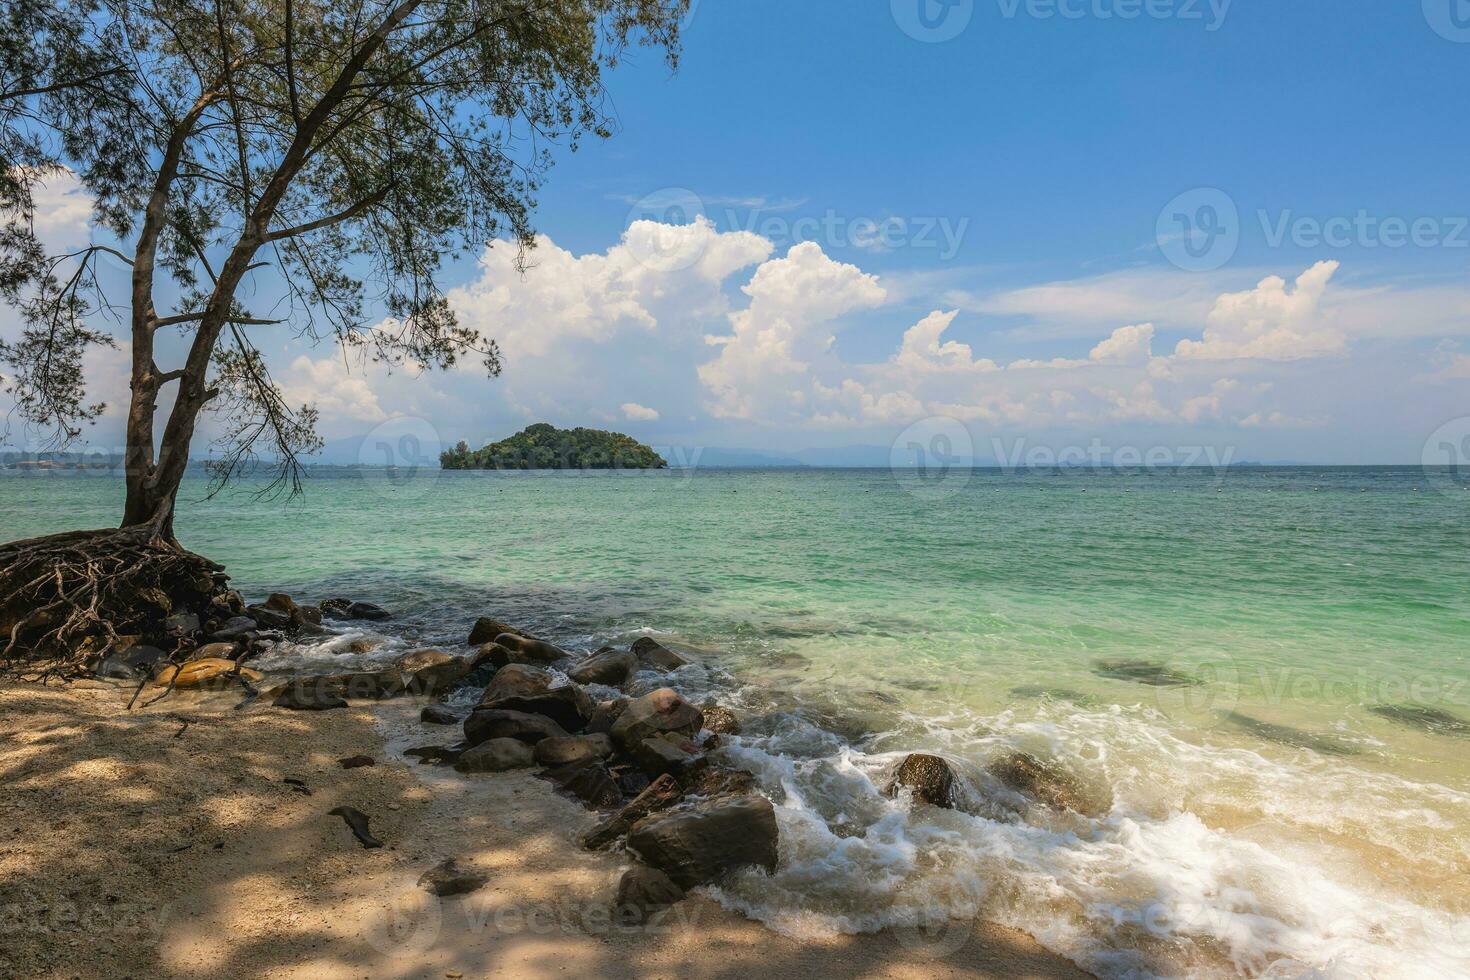 Scenery of Manukan island, an island of Tunku Abdul Rahman National Park in Sabah, Malaysia photo